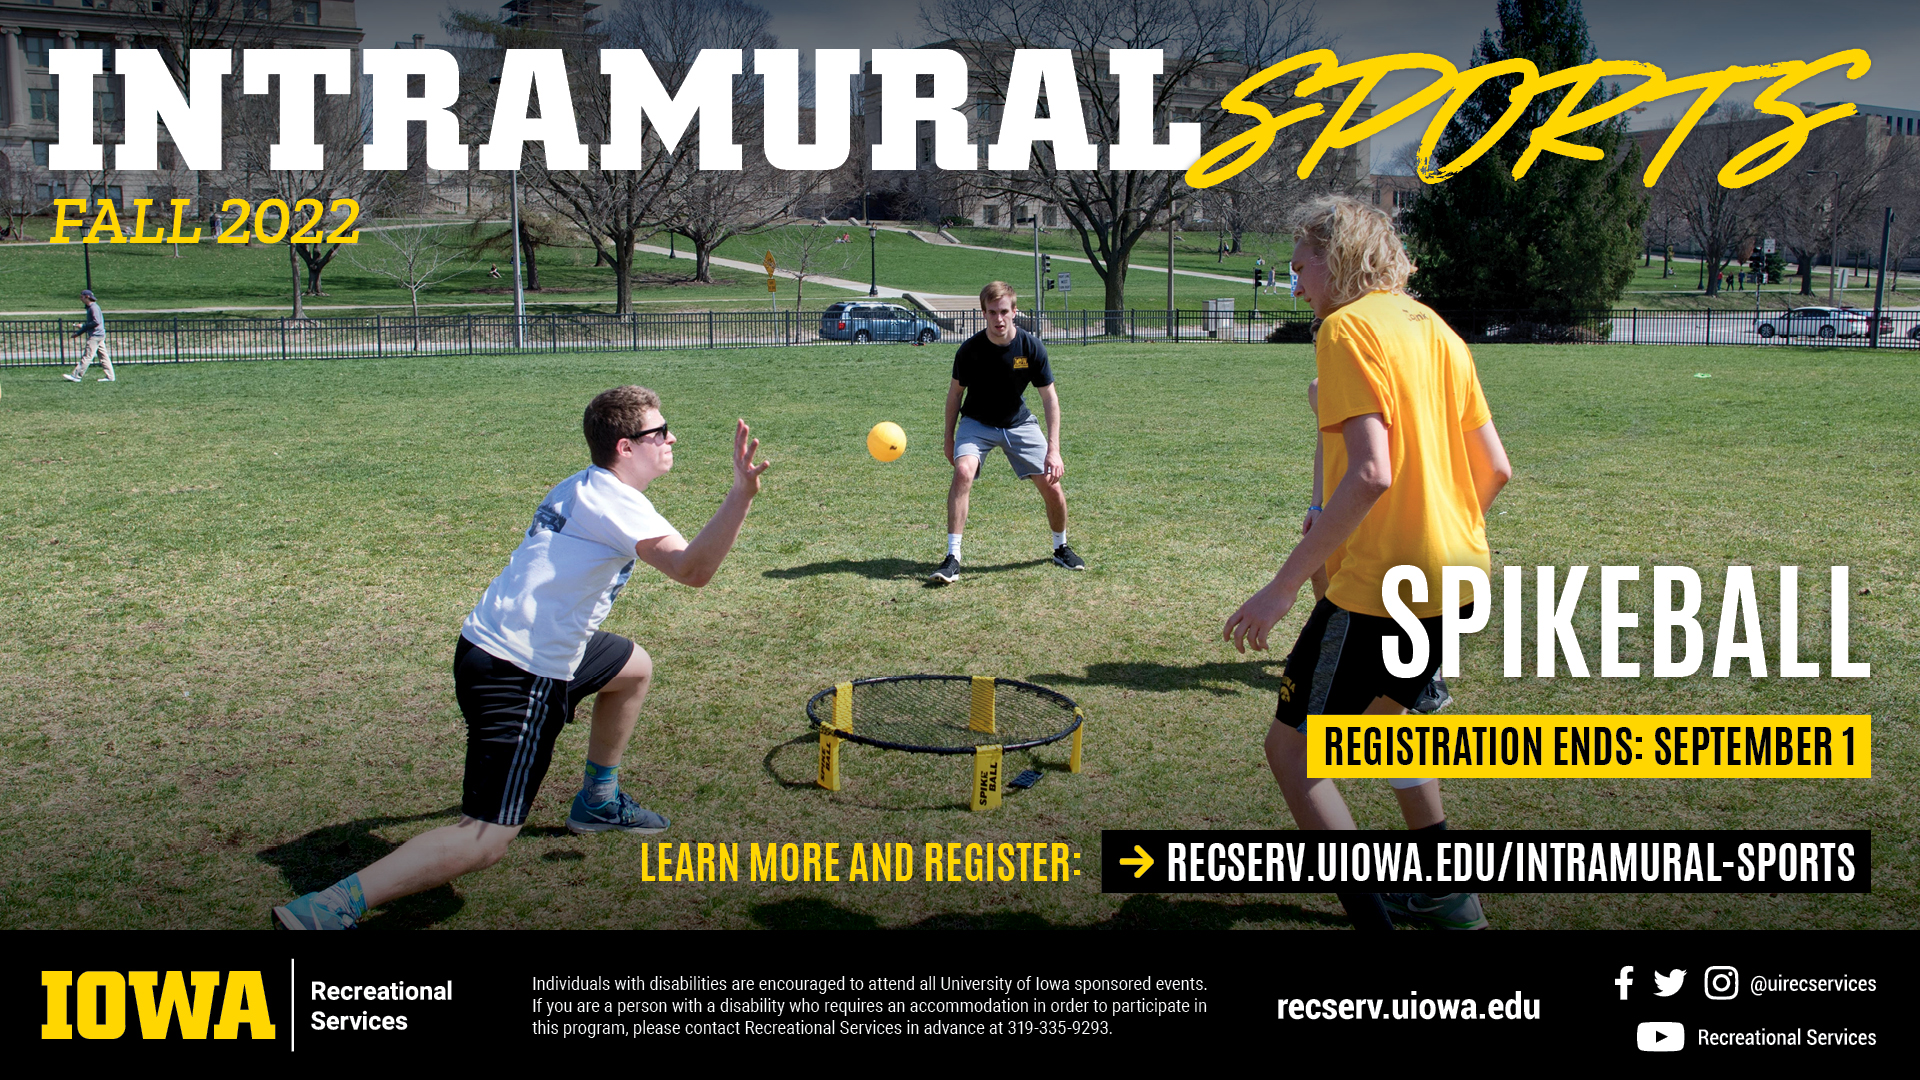 Intramural Sports Fall 2022: Spikeball. Learn more and register at reserv.uiowa.edu/intramural-sports